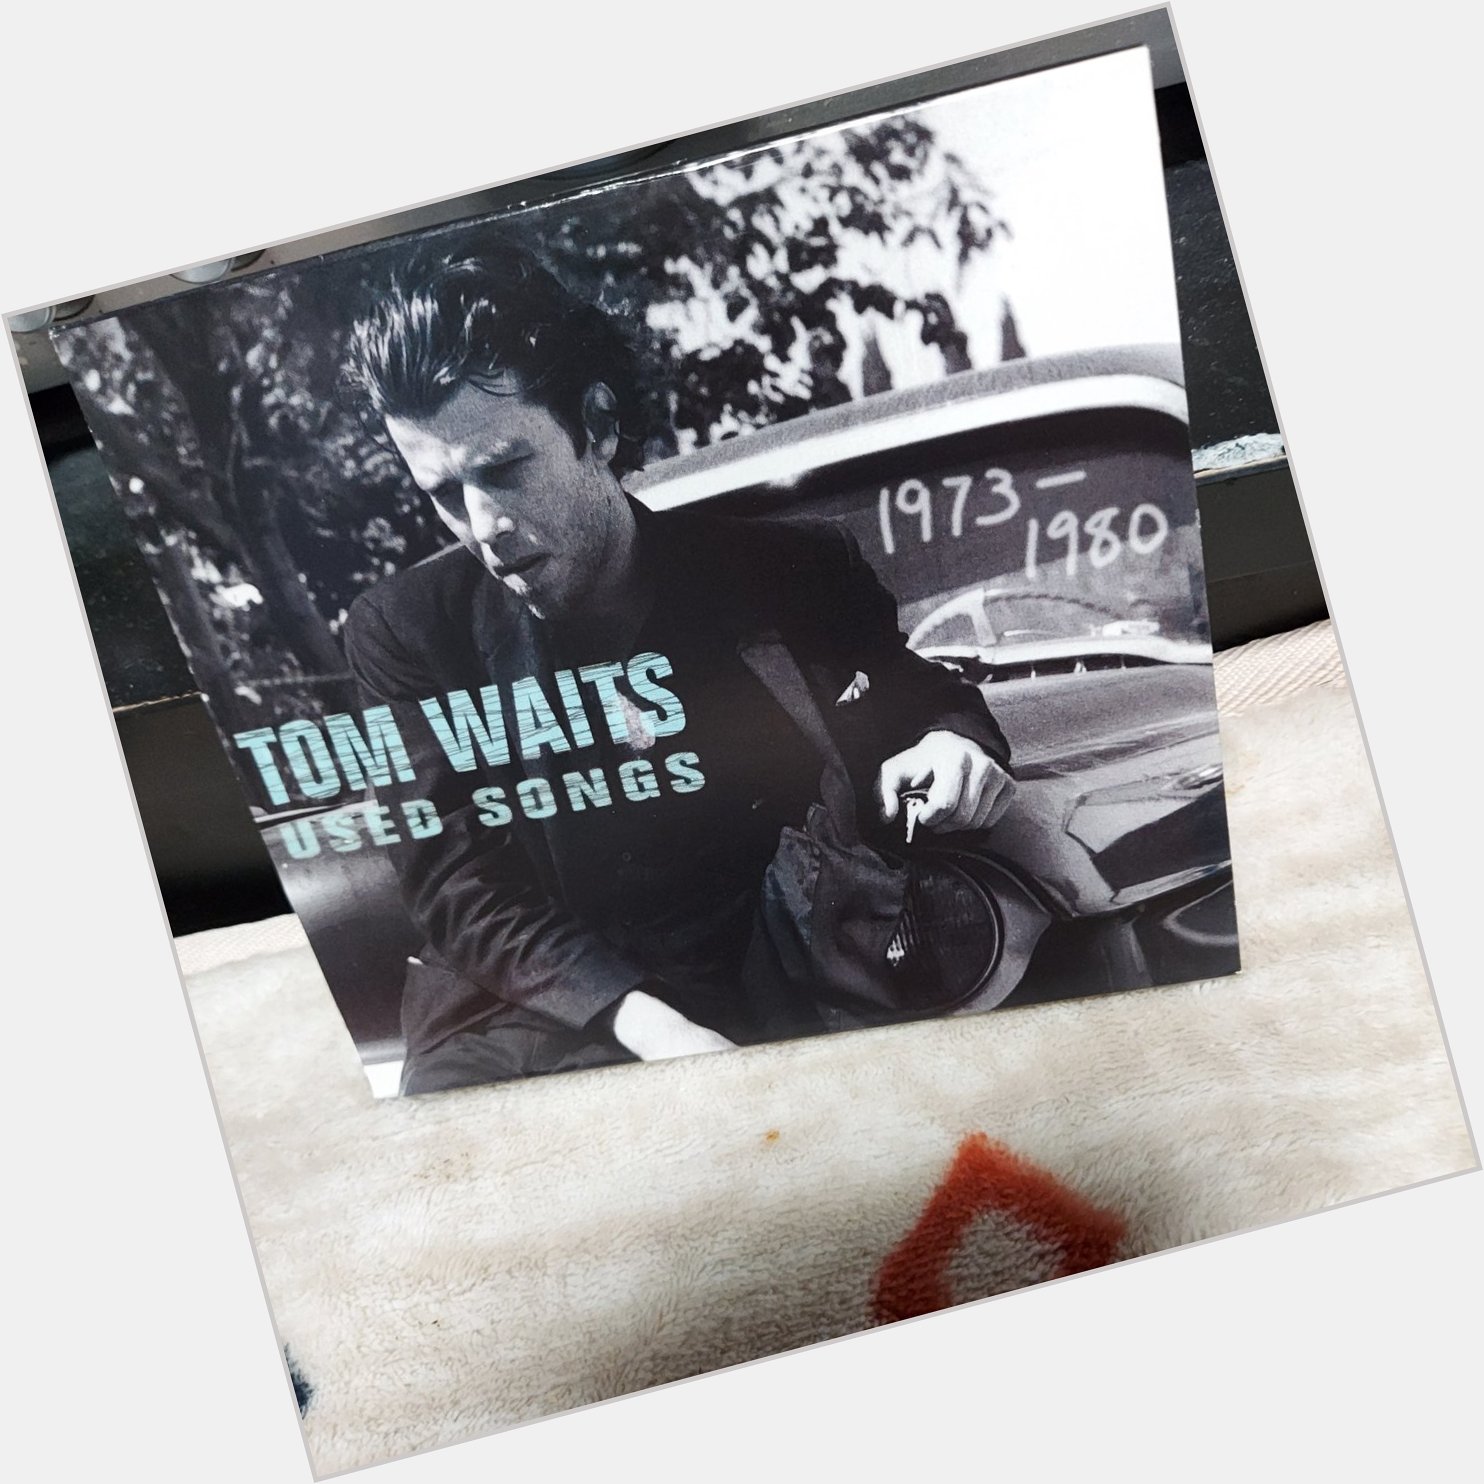 Tom Waits Used Songs 1973 -1980
  Happy Birthday,Tom    